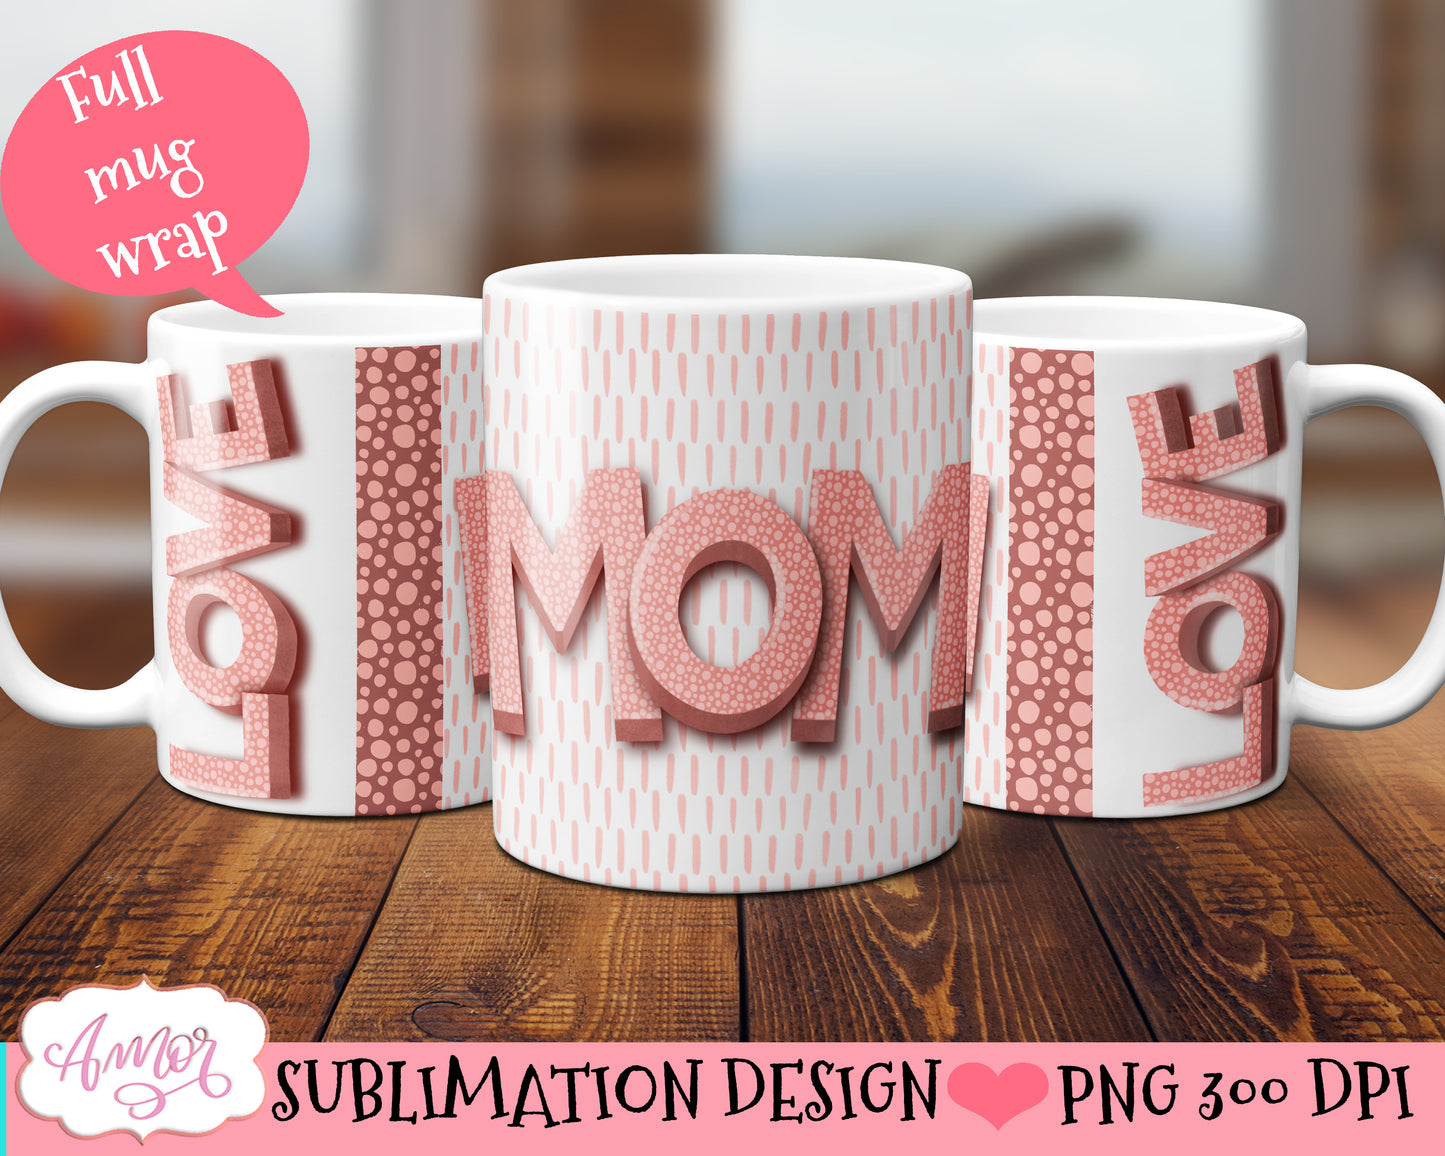 Love Mom mug wrap PNG for sublimation